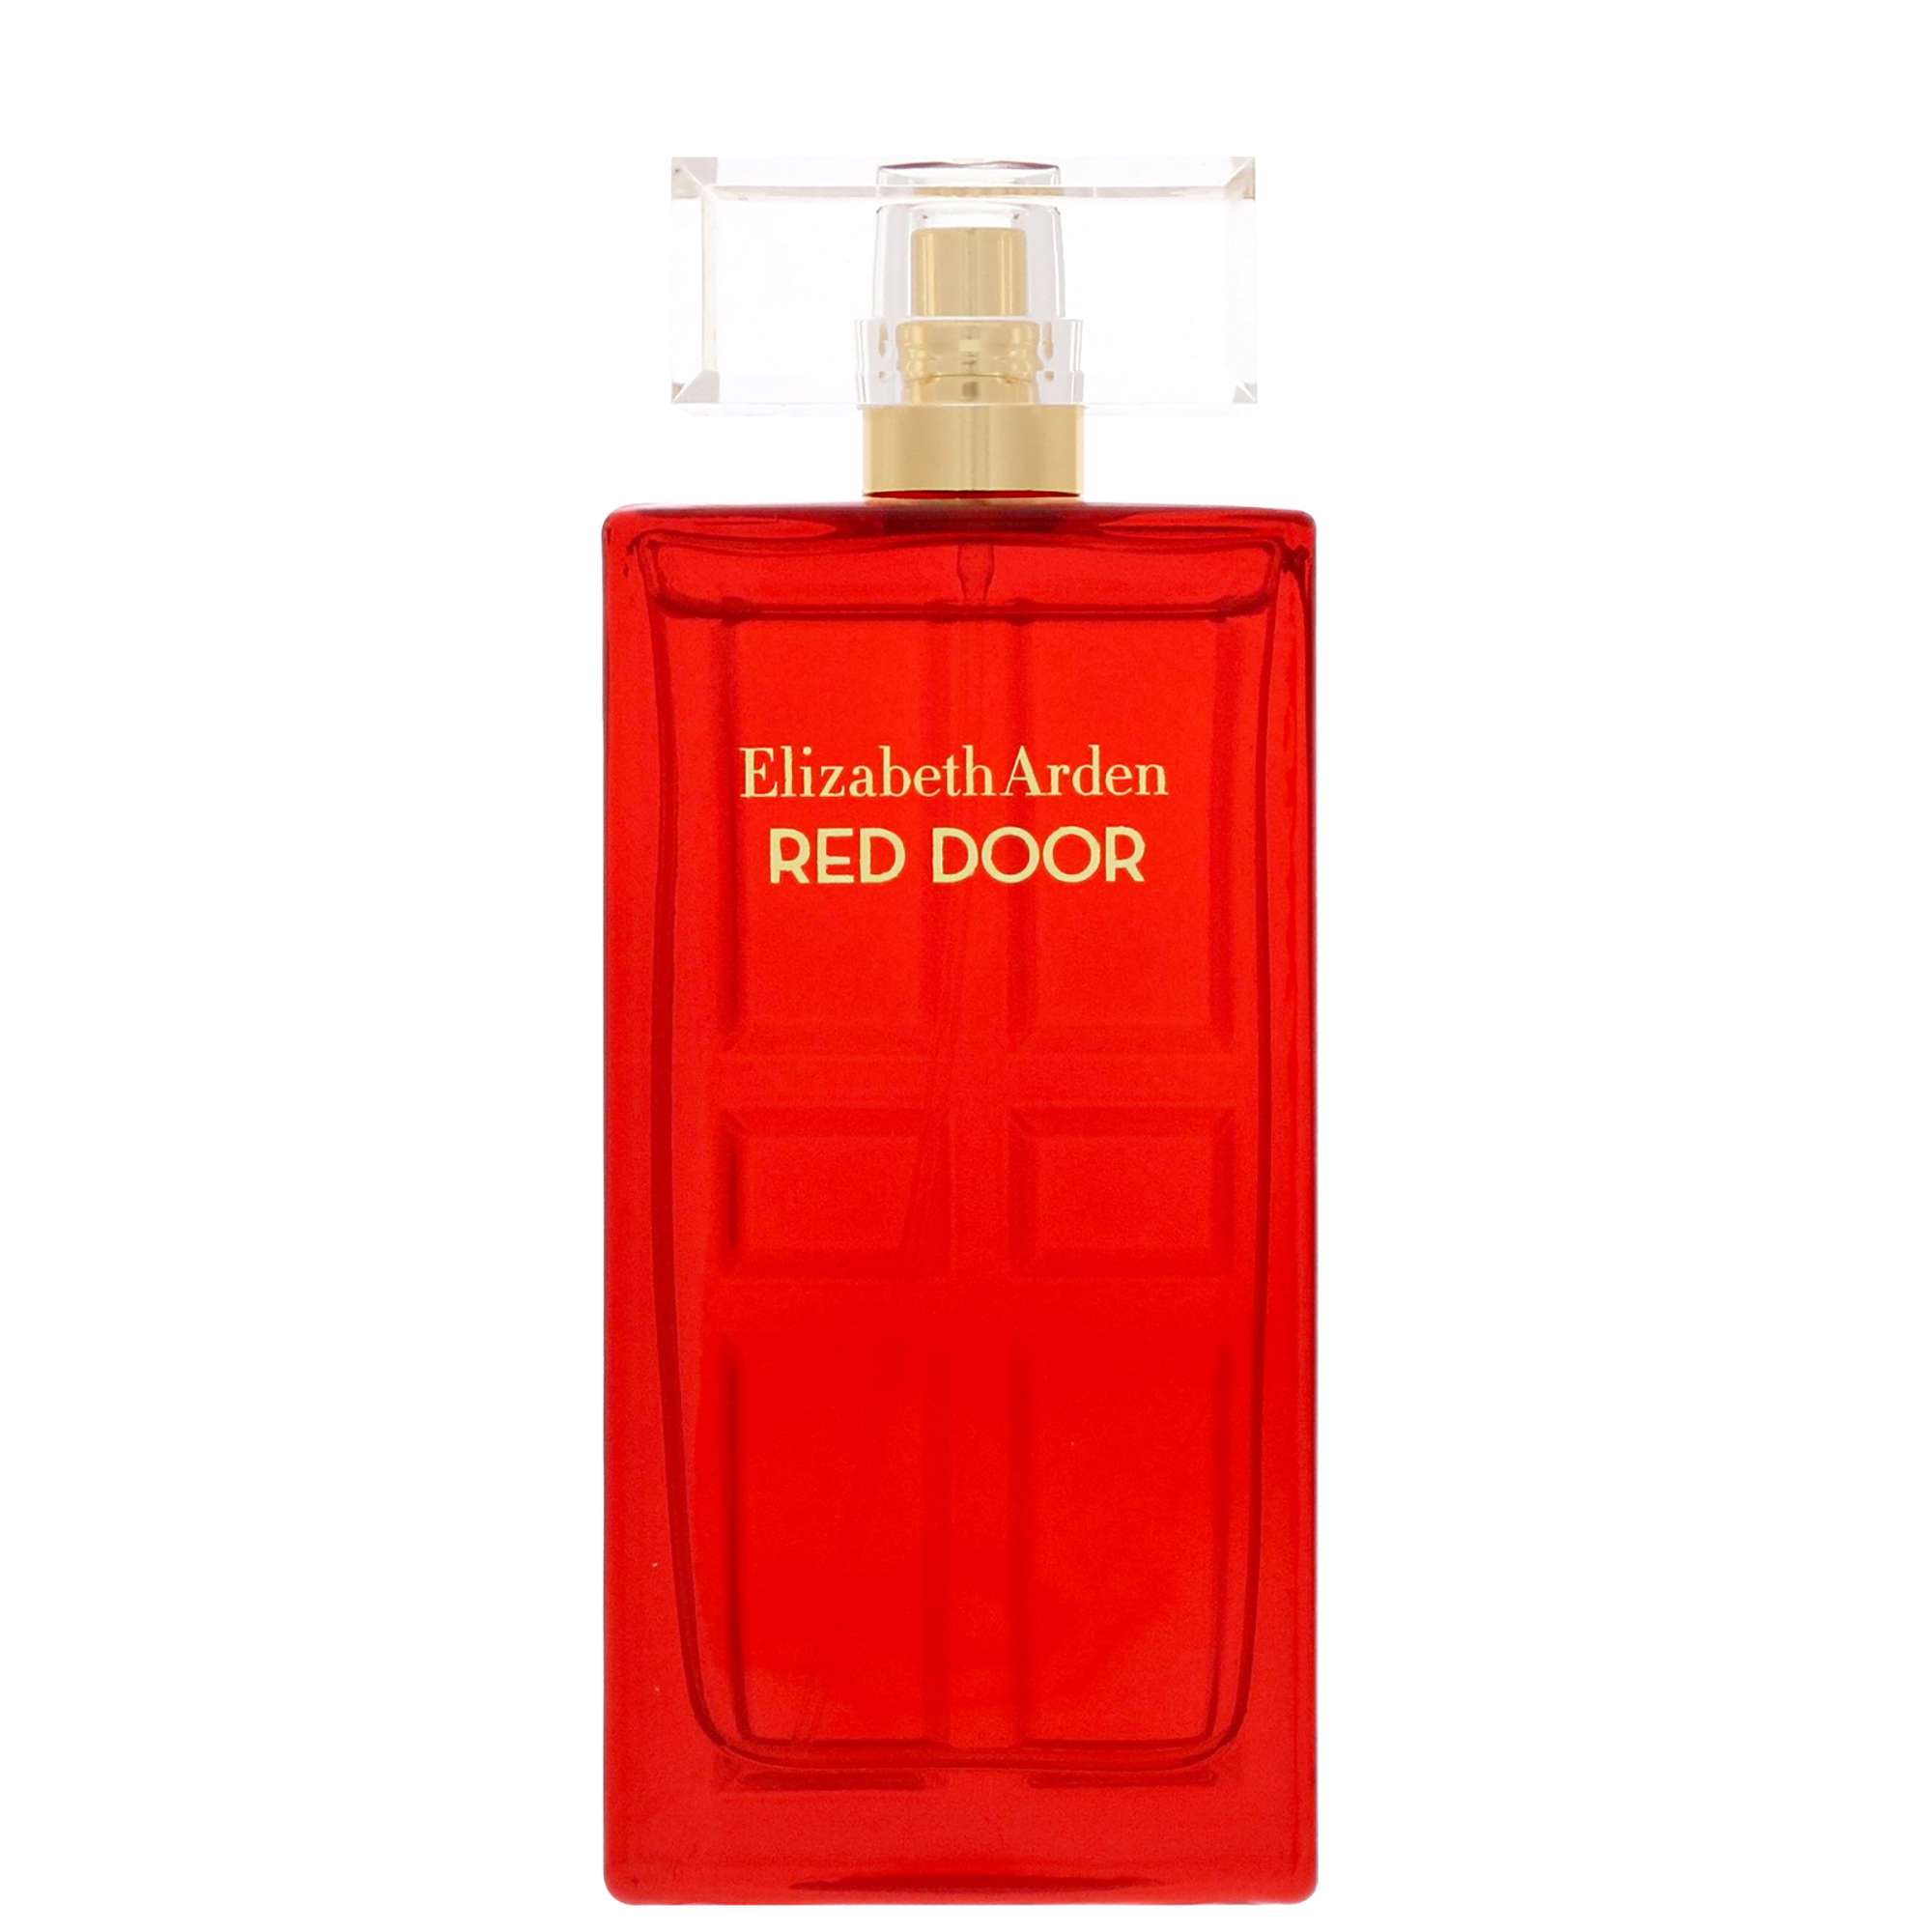 Image of Elizabeth Arden Red Door Eau de Toilette Spray 50ml